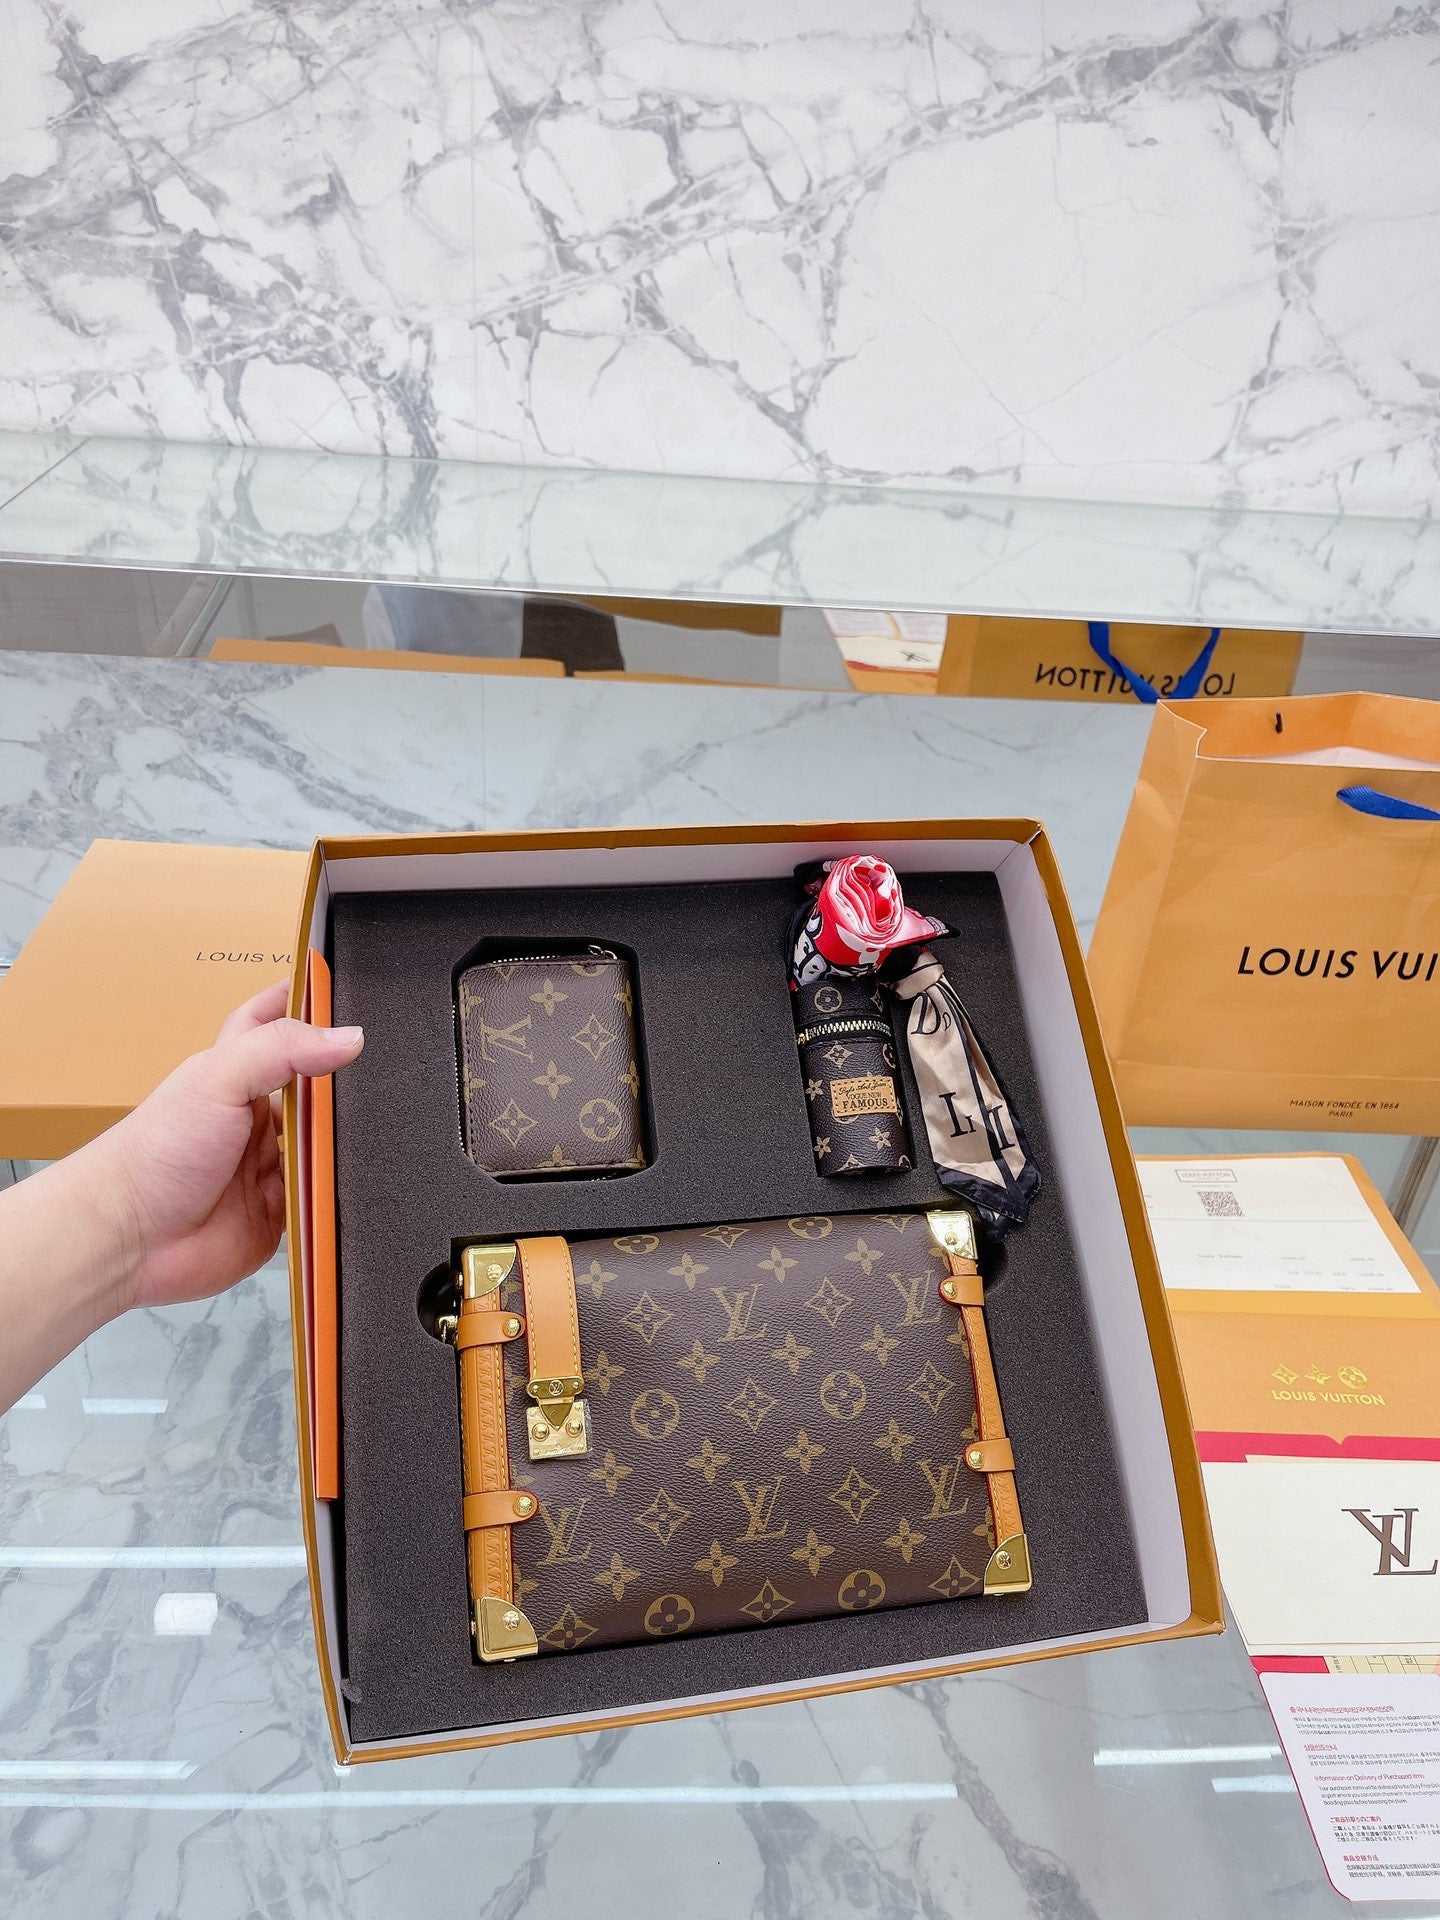 LOUIS VUITTON Shopping Bag *Authentic & New*